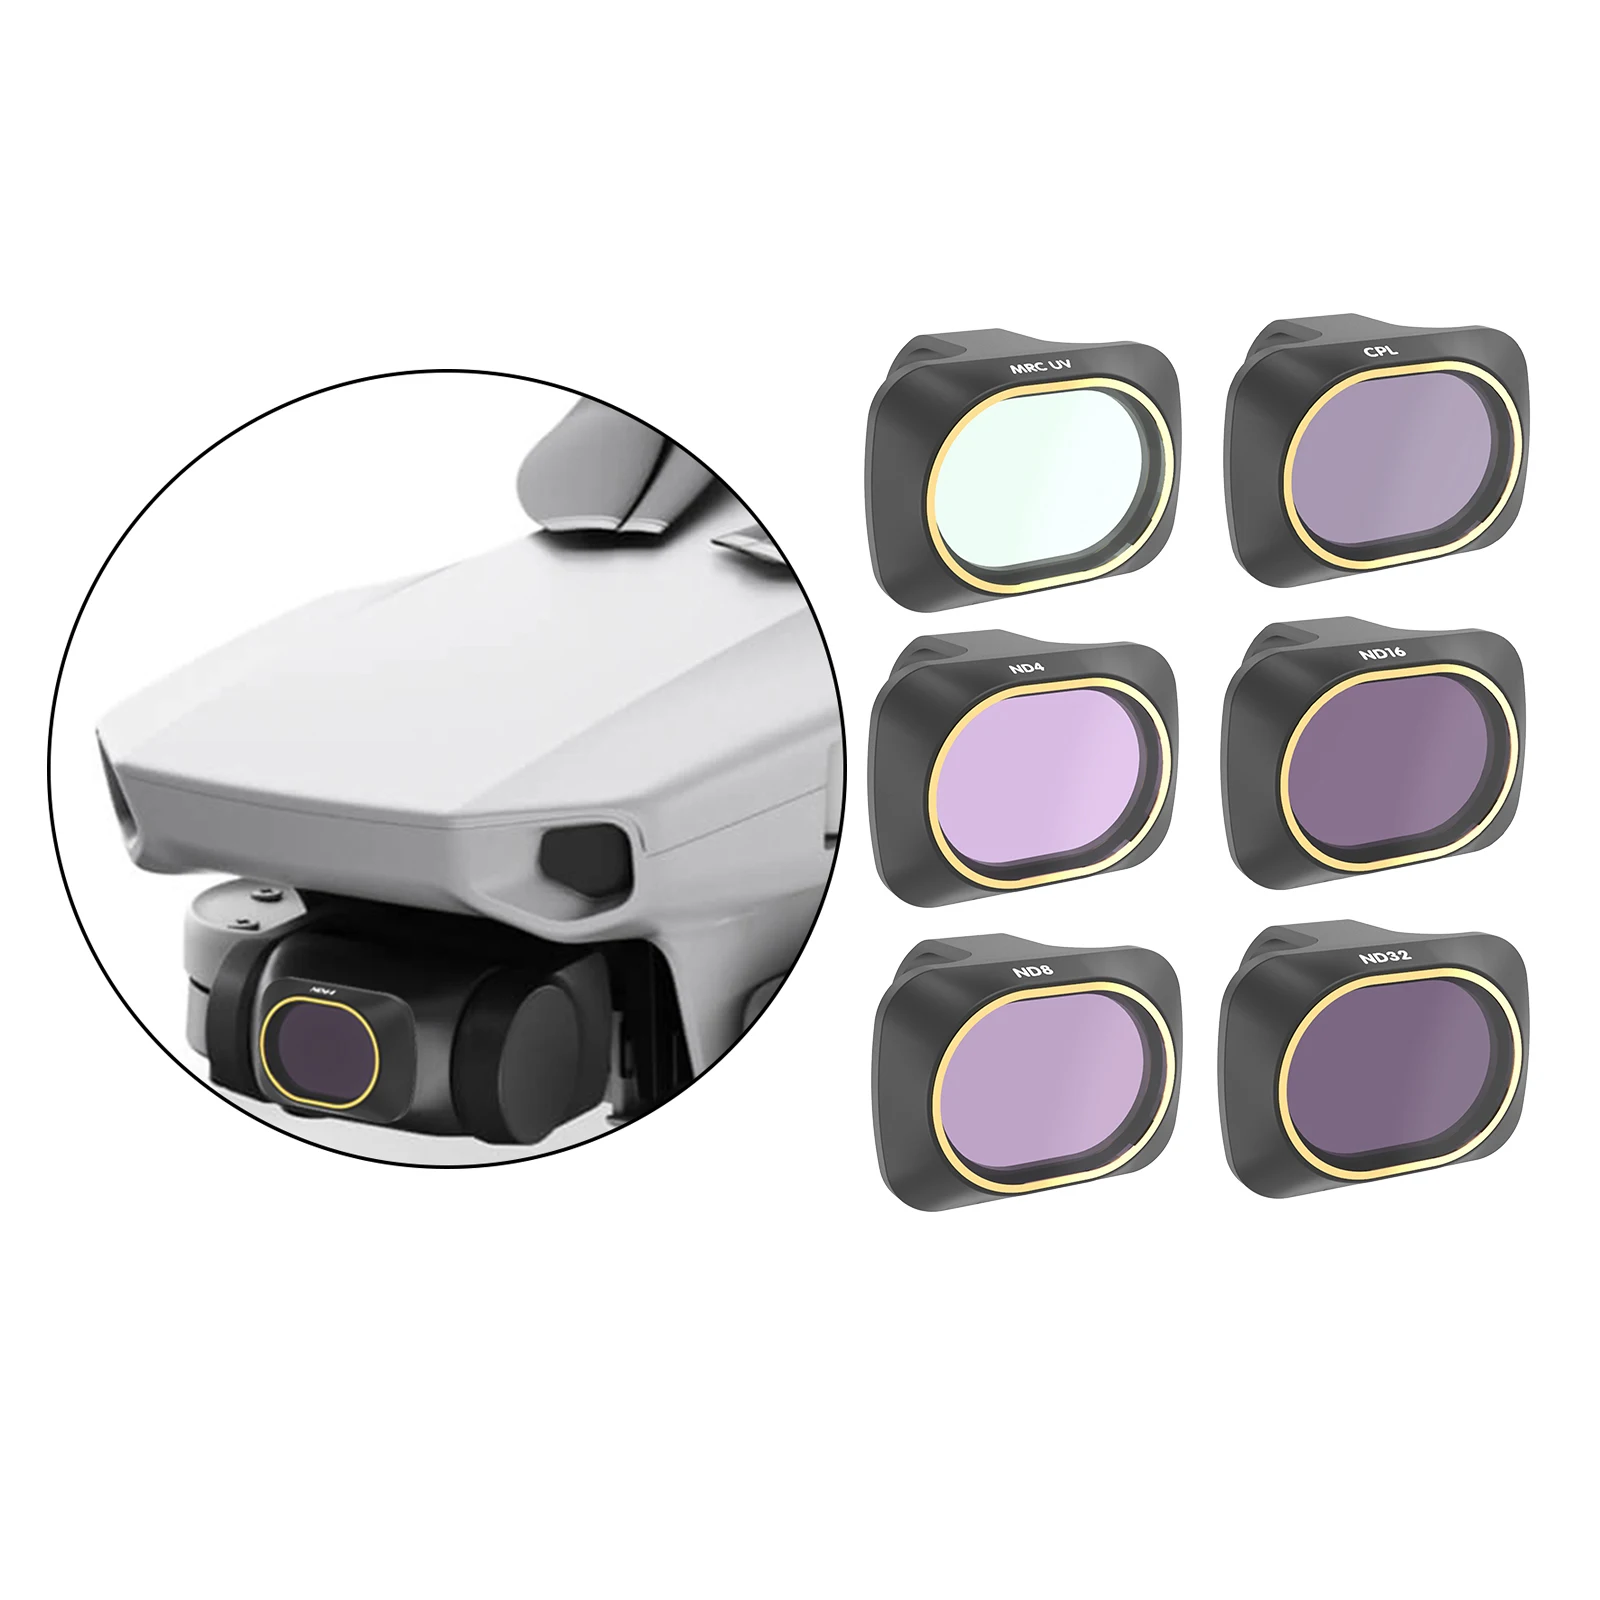 High Quality ND Lens Filter for DJI Mavic Mini Mini 2 Drone Accessories